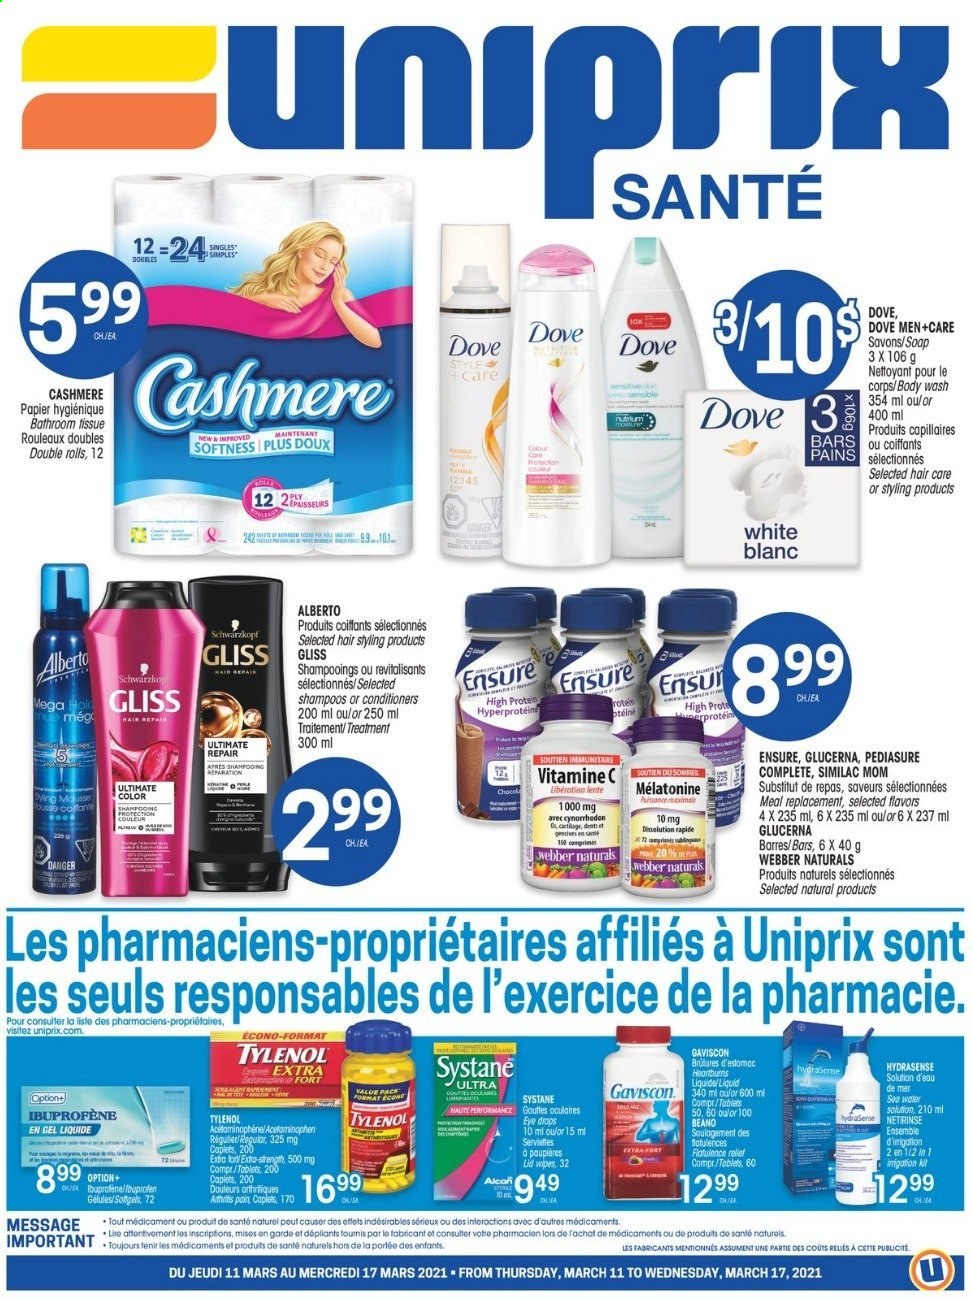 thumbnail - Uniprix Santé Flyer - March 11, 2021 - March 17, 2021 - Sales products - Mars, Similac, wipes, bath tissue, body wash, Gliss, soap, Tylenol, Glucerna, eye drops, Gaviscon, Systane. Page 1.